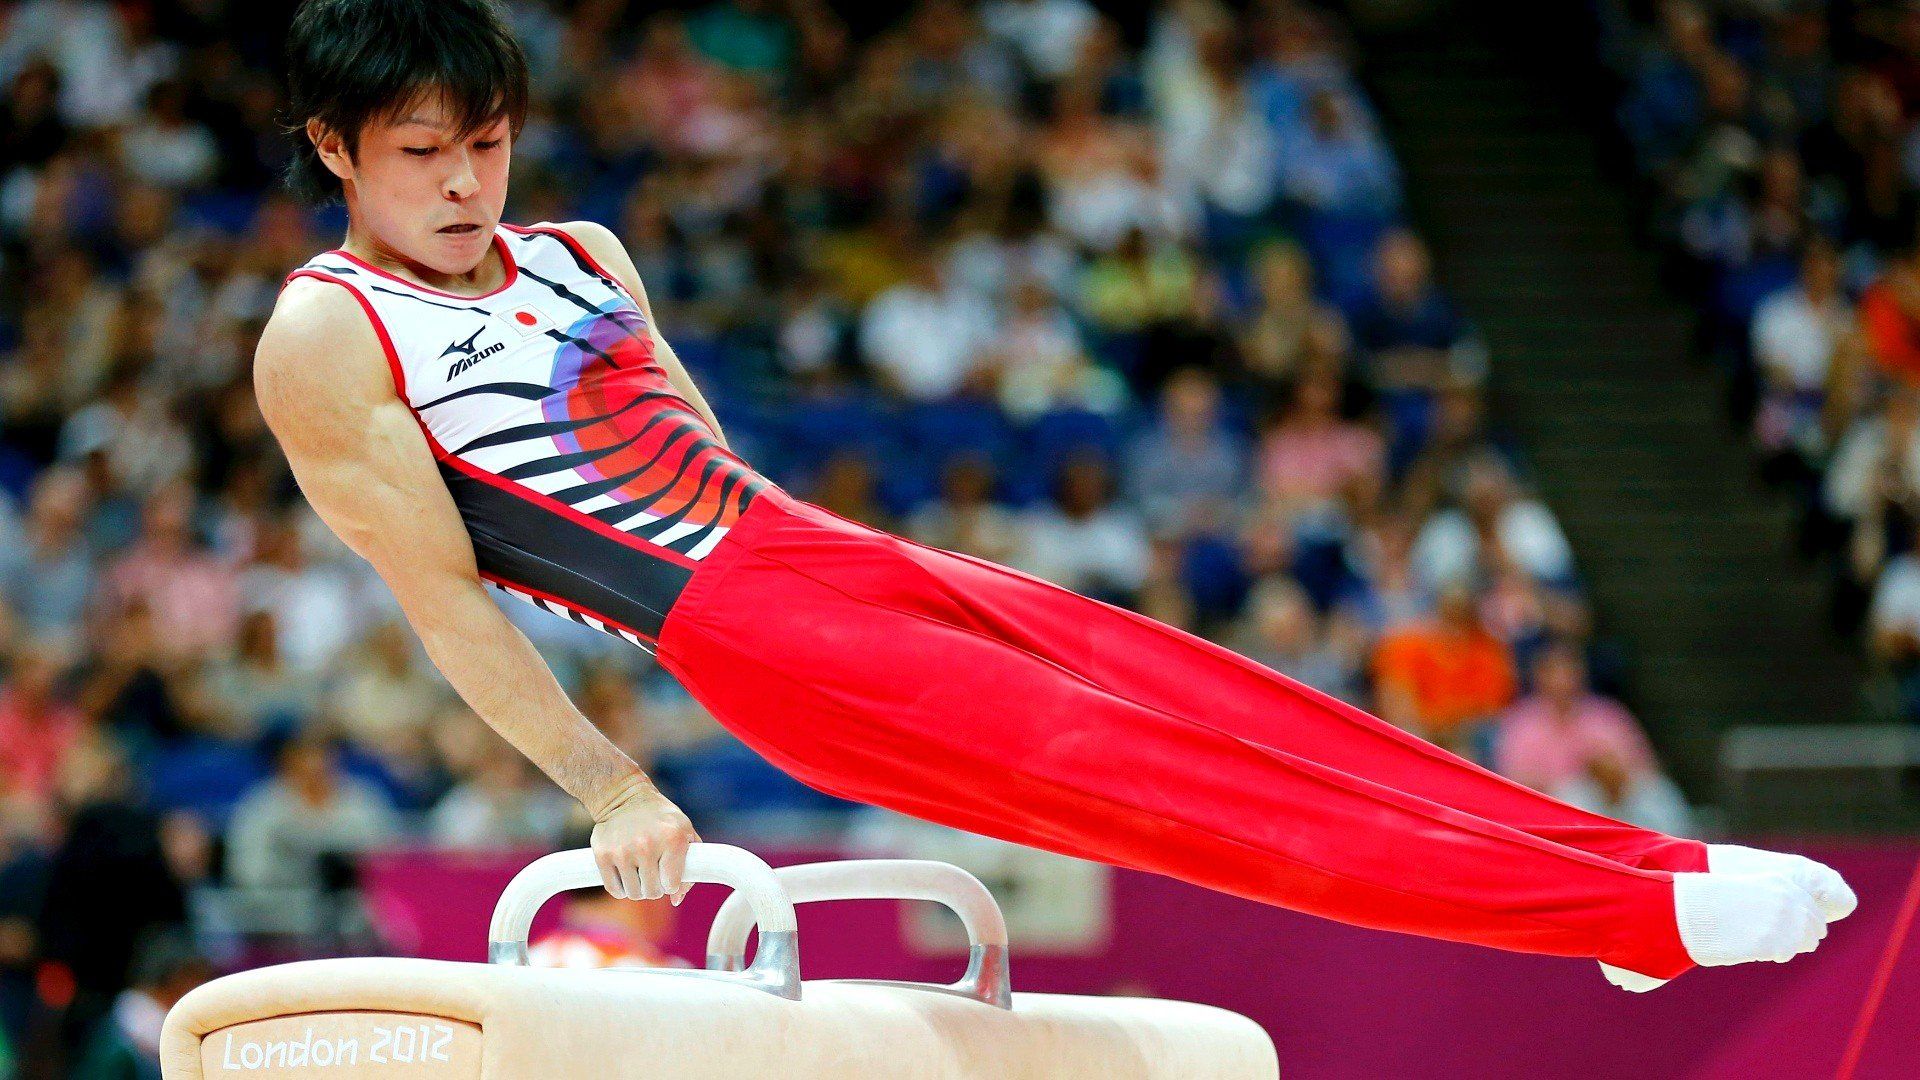 Japan Japanese gymnast athletes gymnastics Olympics 2012 Kohei Uchimura wallpaperx1080